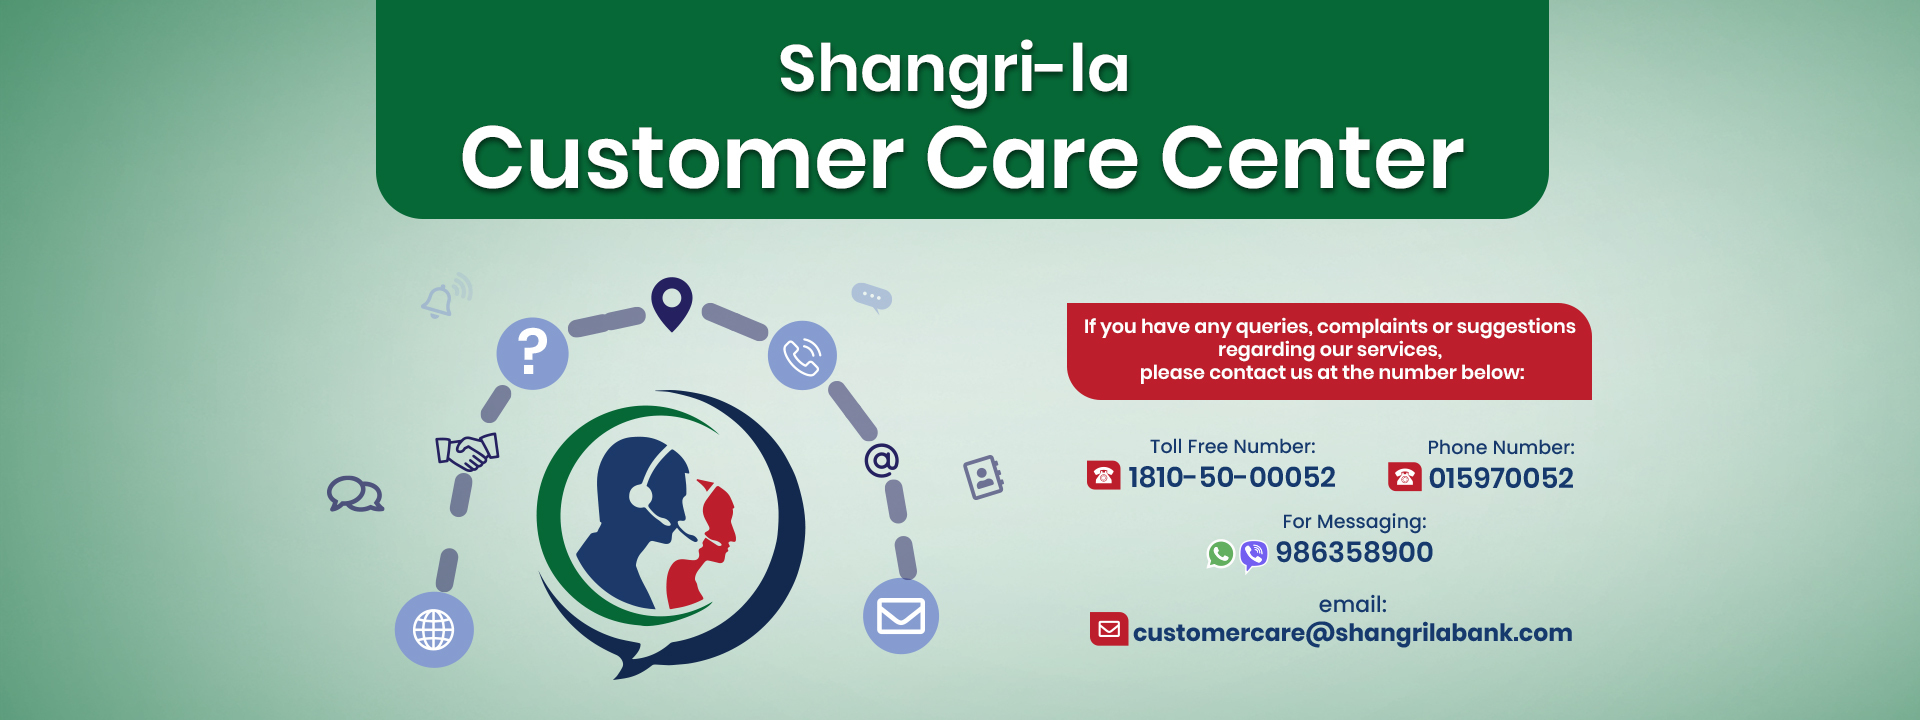 Shangri-La Customer Care